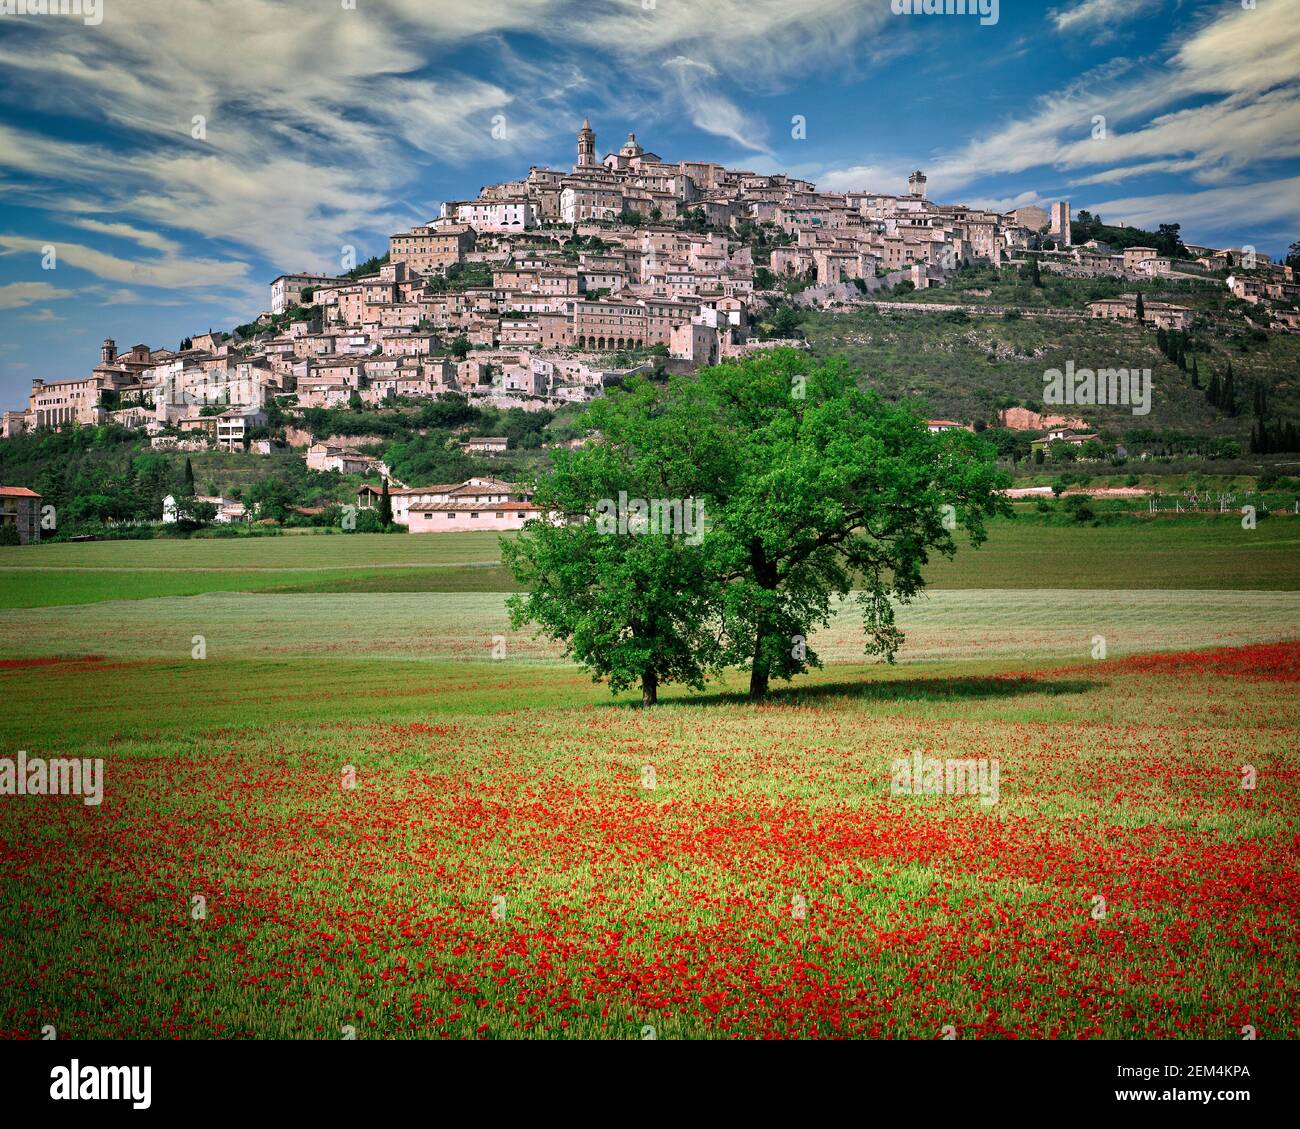 IT - UMBRIA: The picturesque town of Trevi (Latin: Trebiae) Stock Photo